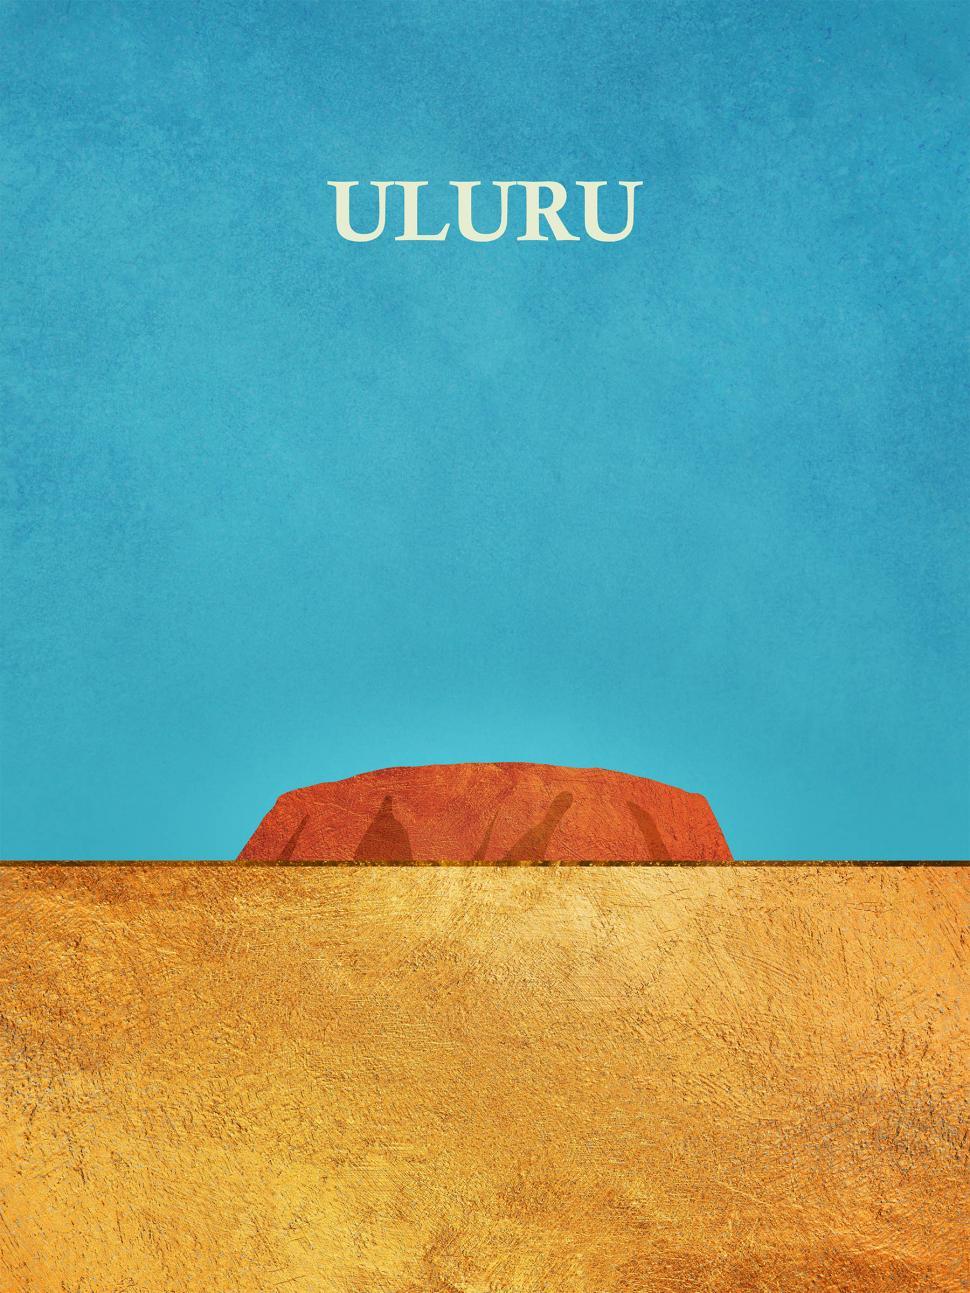 Download Free Stock Photo of Uluru - Ayers Rock - Abstract Desert Landscape 